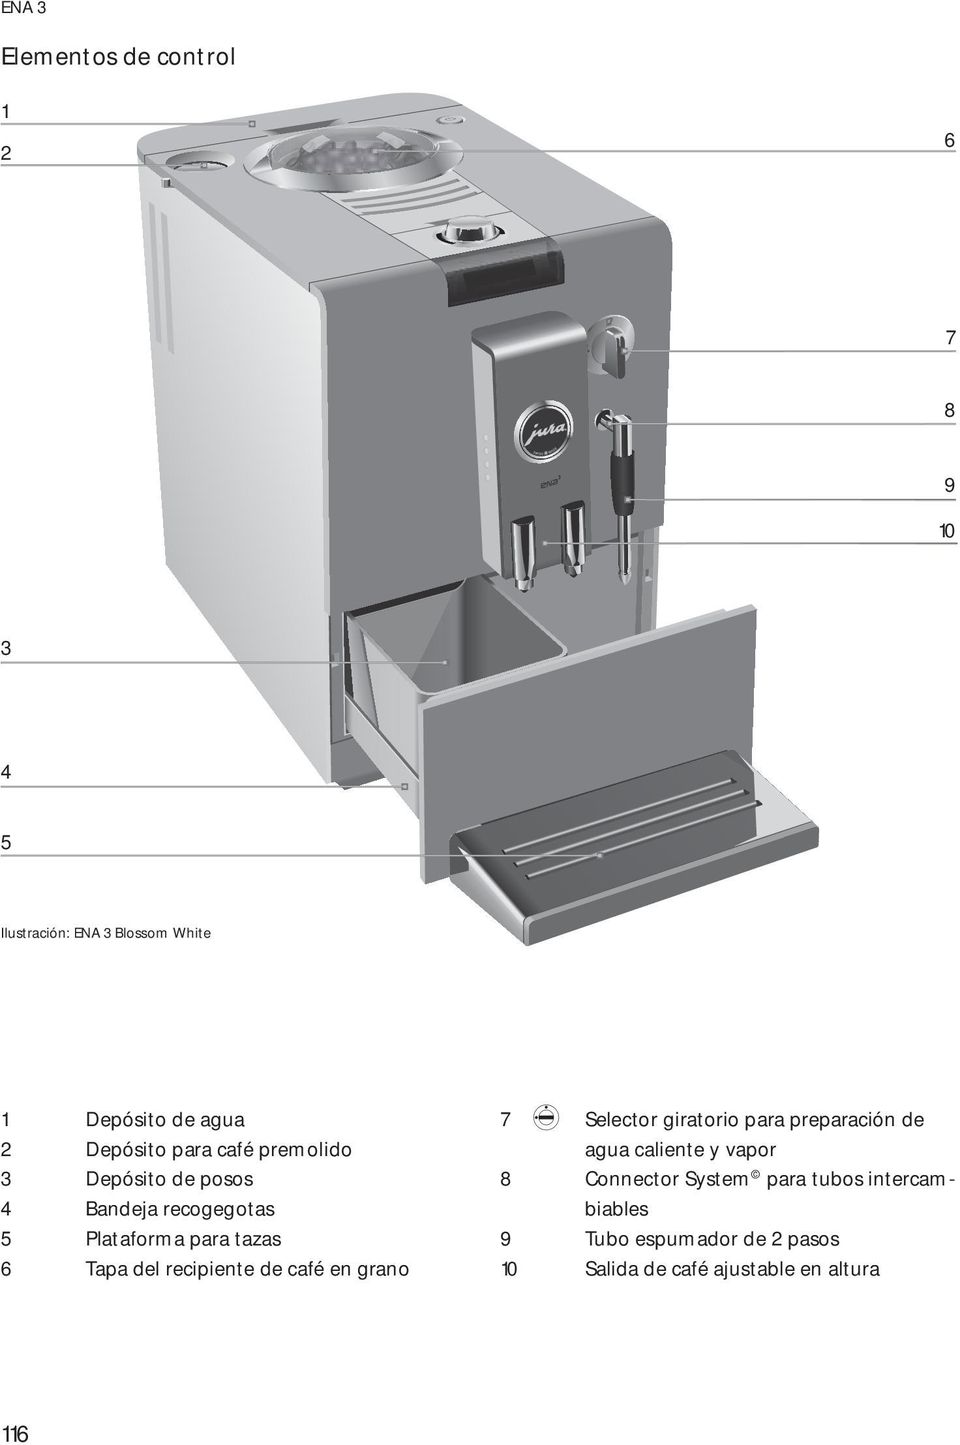 l recipiente café en grano 7 l Selector giratorio para preparación agua caliente y vapor 8